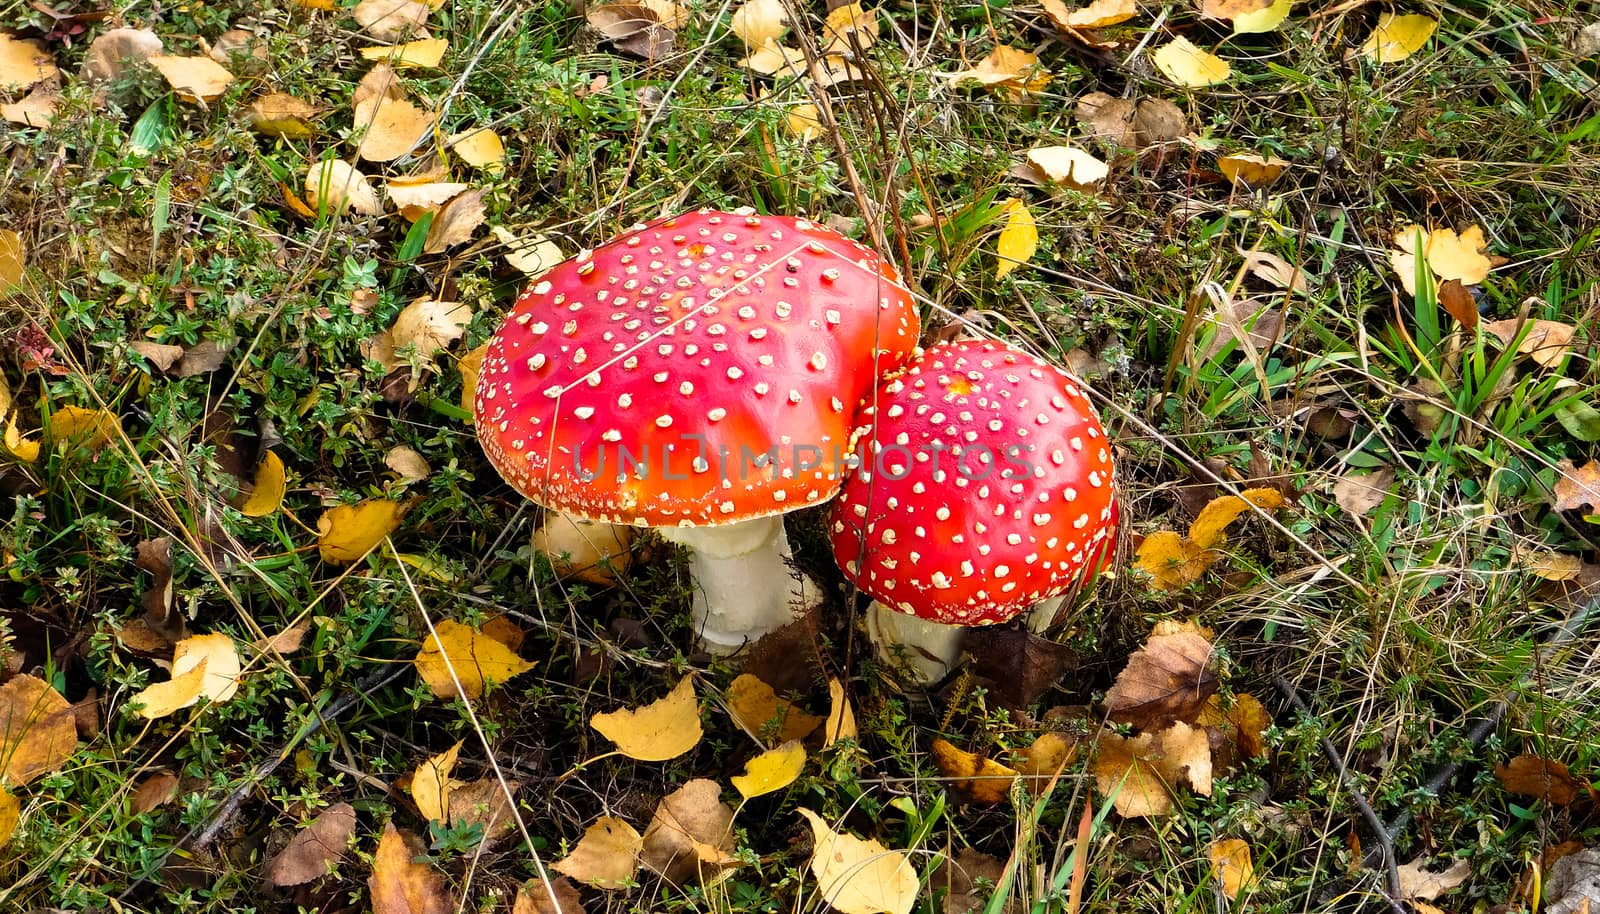 find beautiful mushrooms hidden in the grass